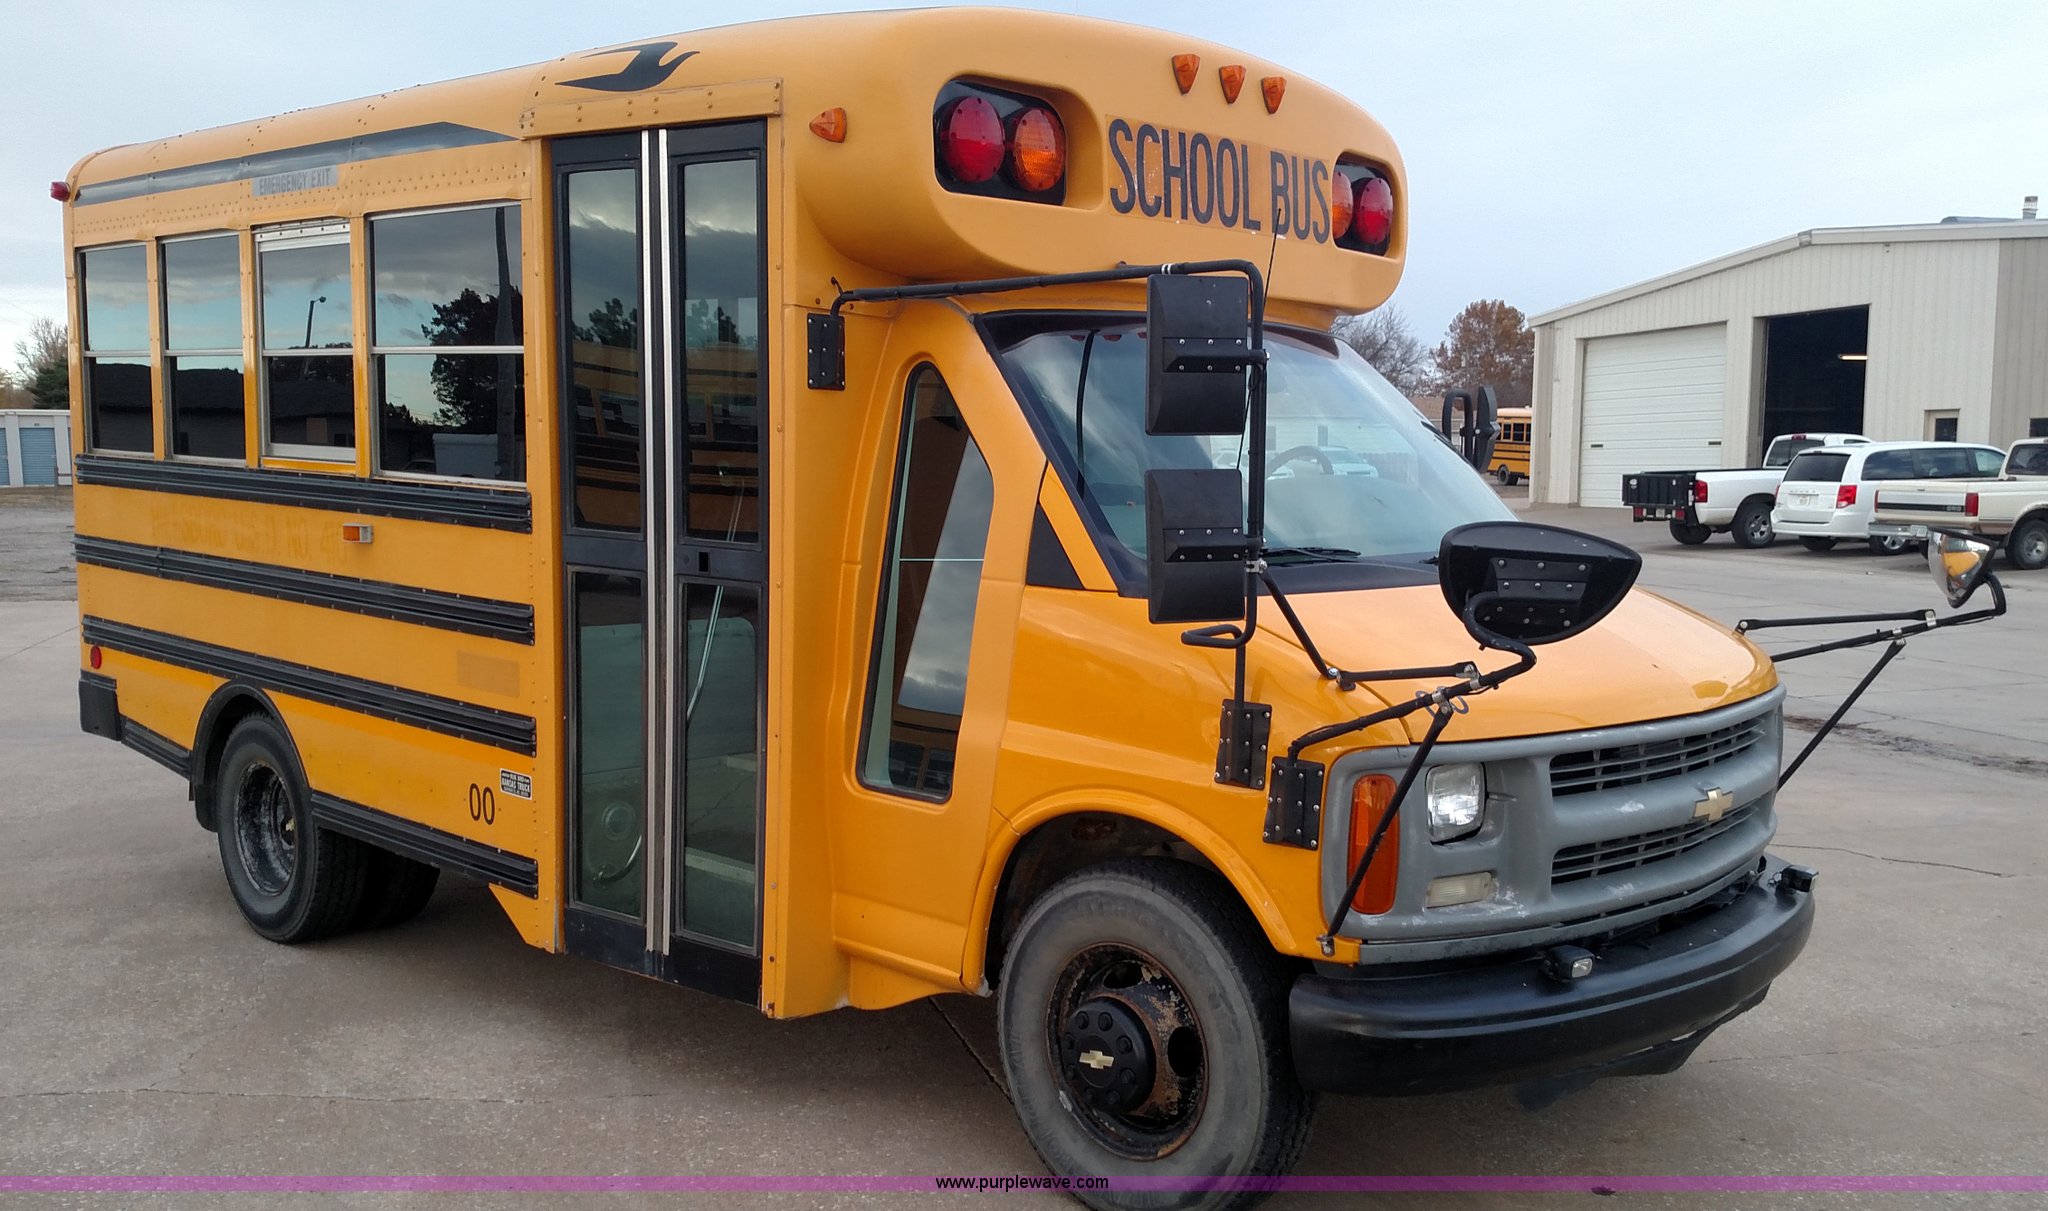 2000 Chevrolet Express 3500 Cargo school bus in Hillsboro, KS | Item BR9417  sold | Purple Wave